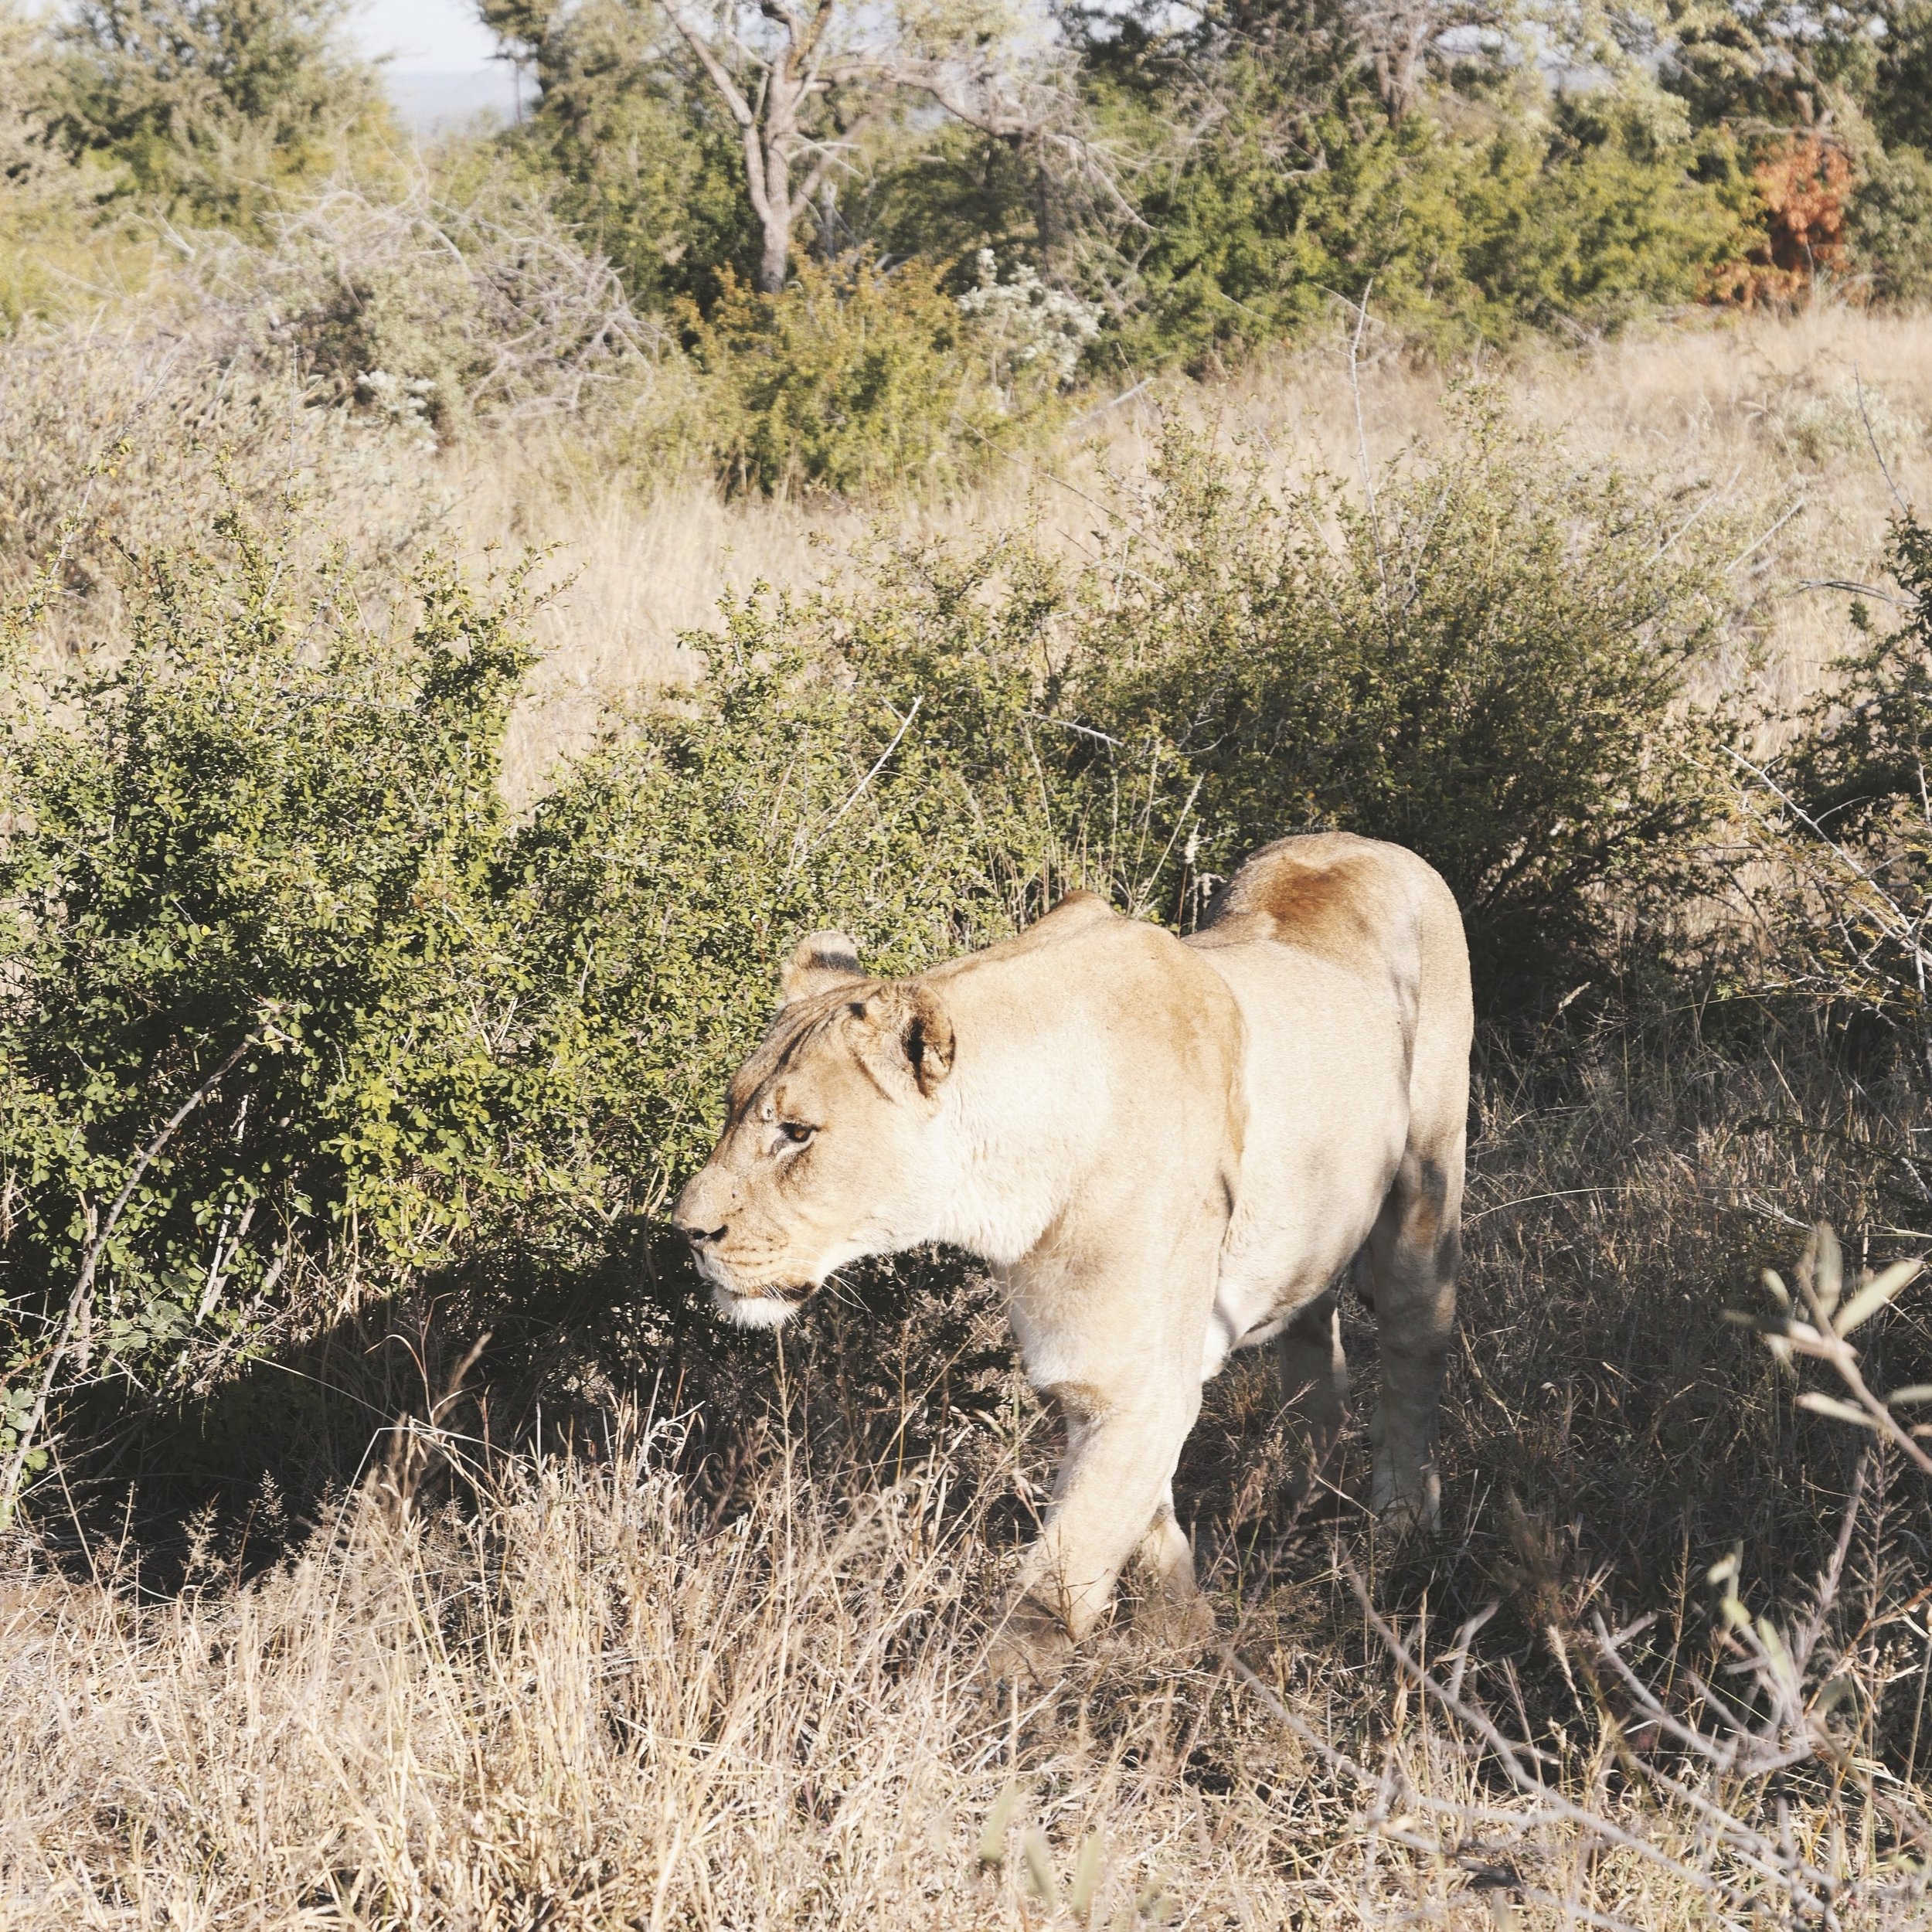 Lioness @ Madikwe Reserve